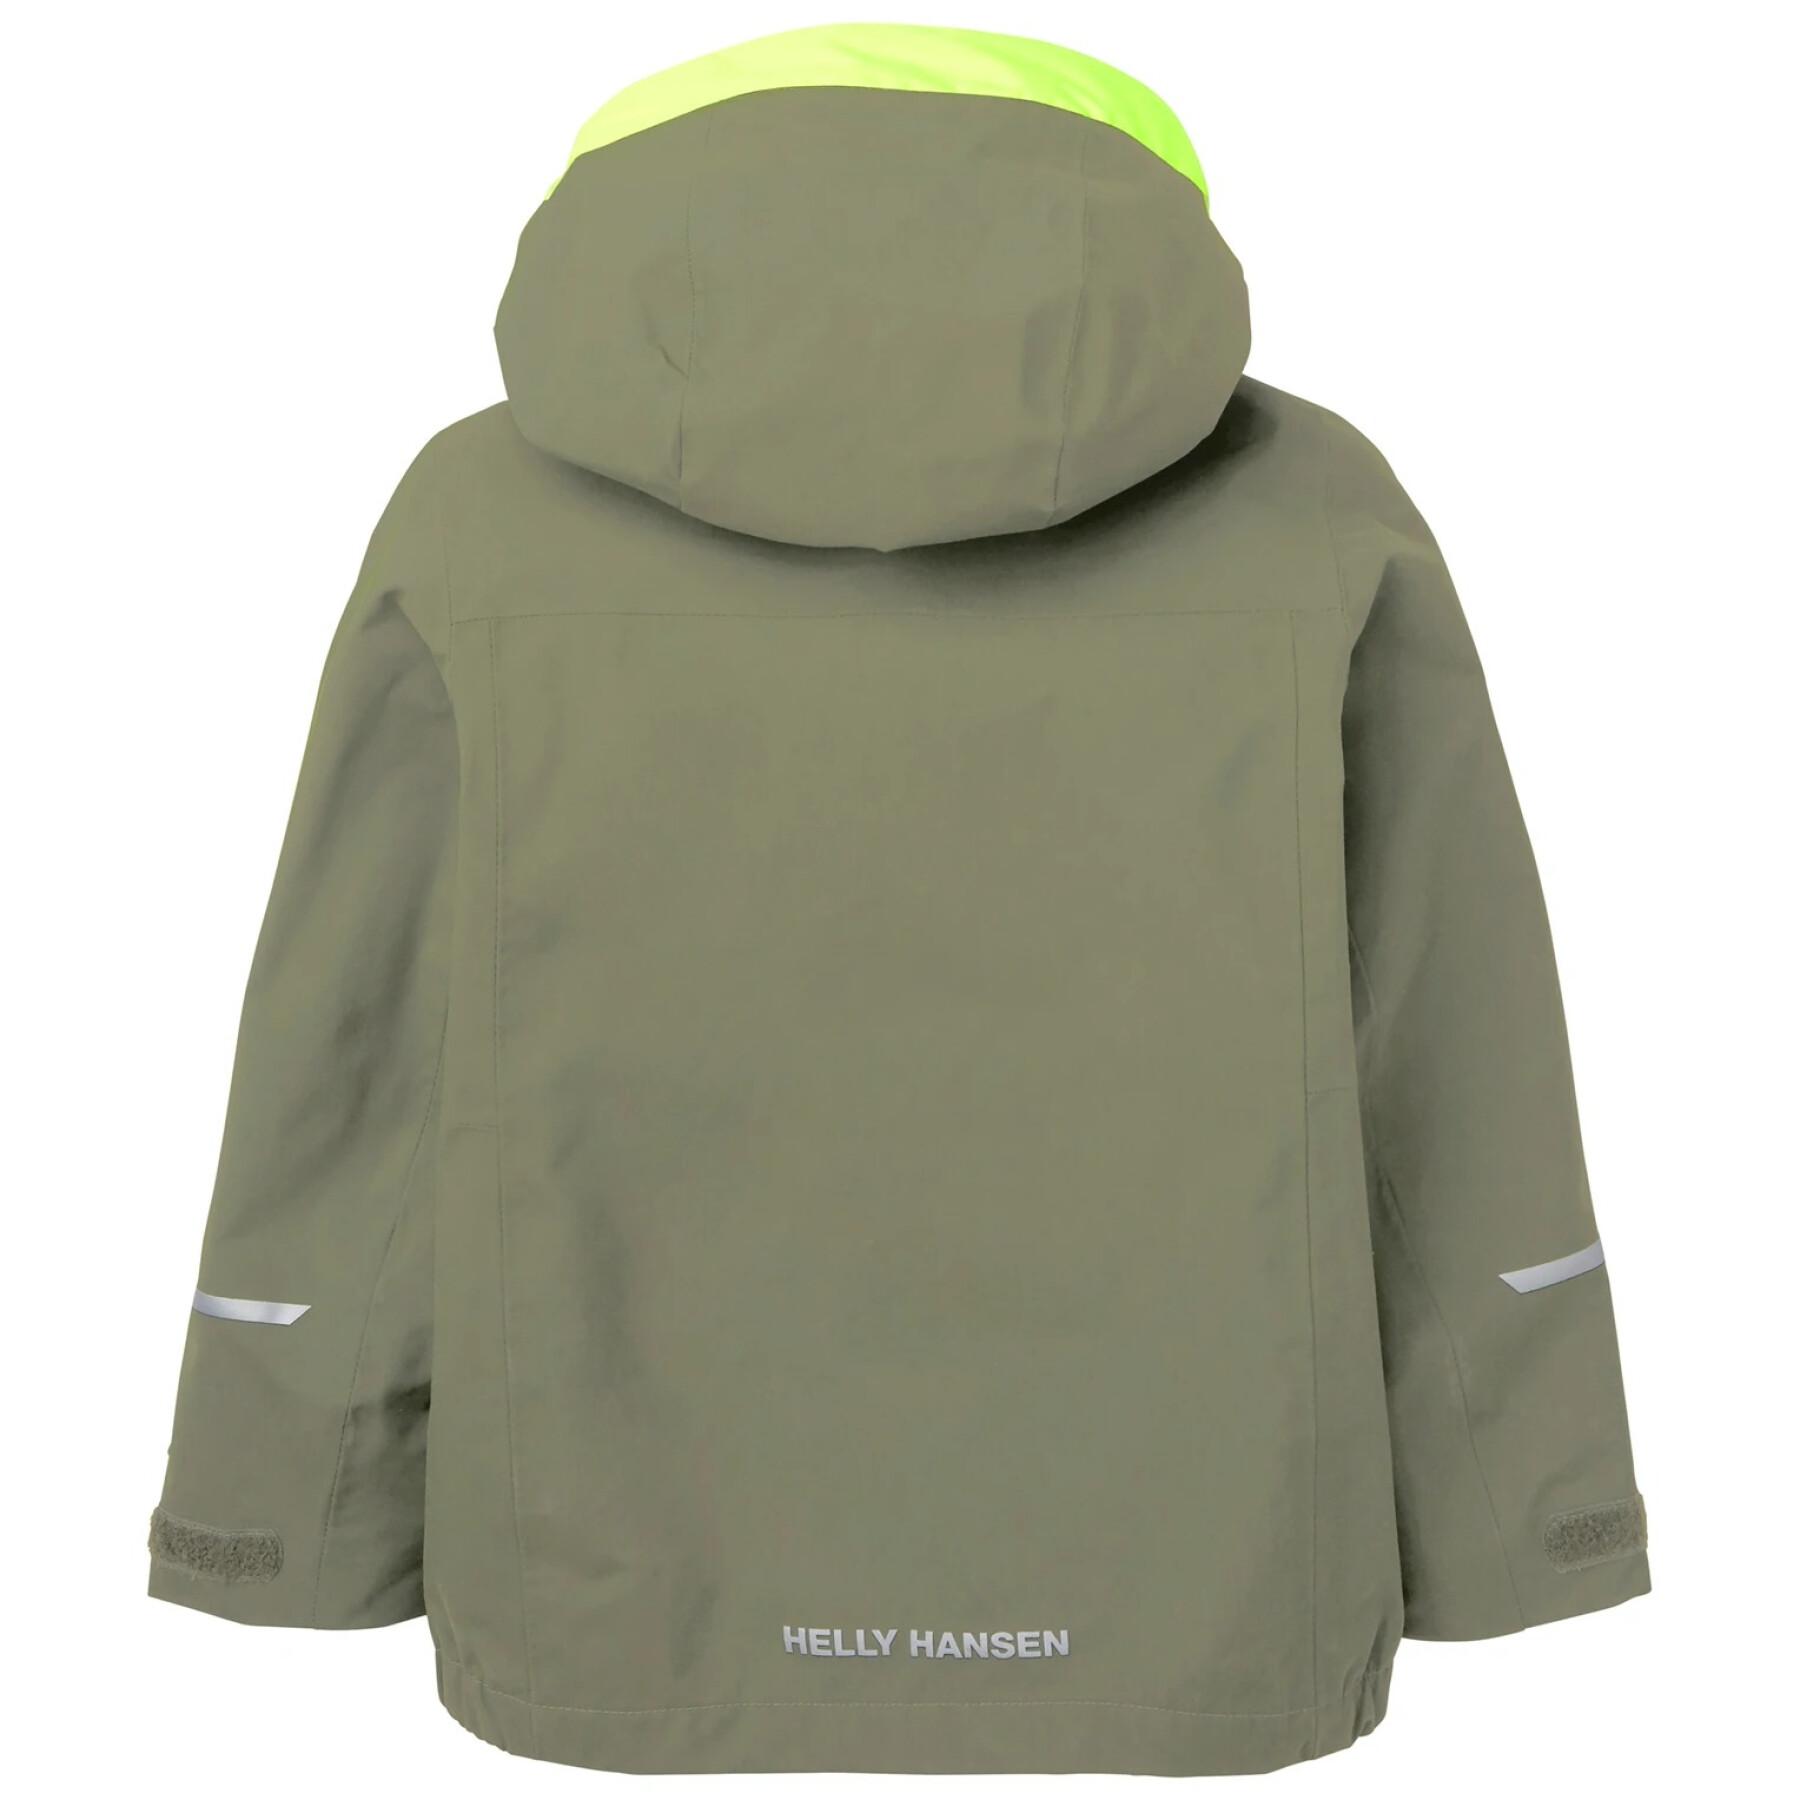 Waterproof jacket for children Helly Hansen Shelter 2.0